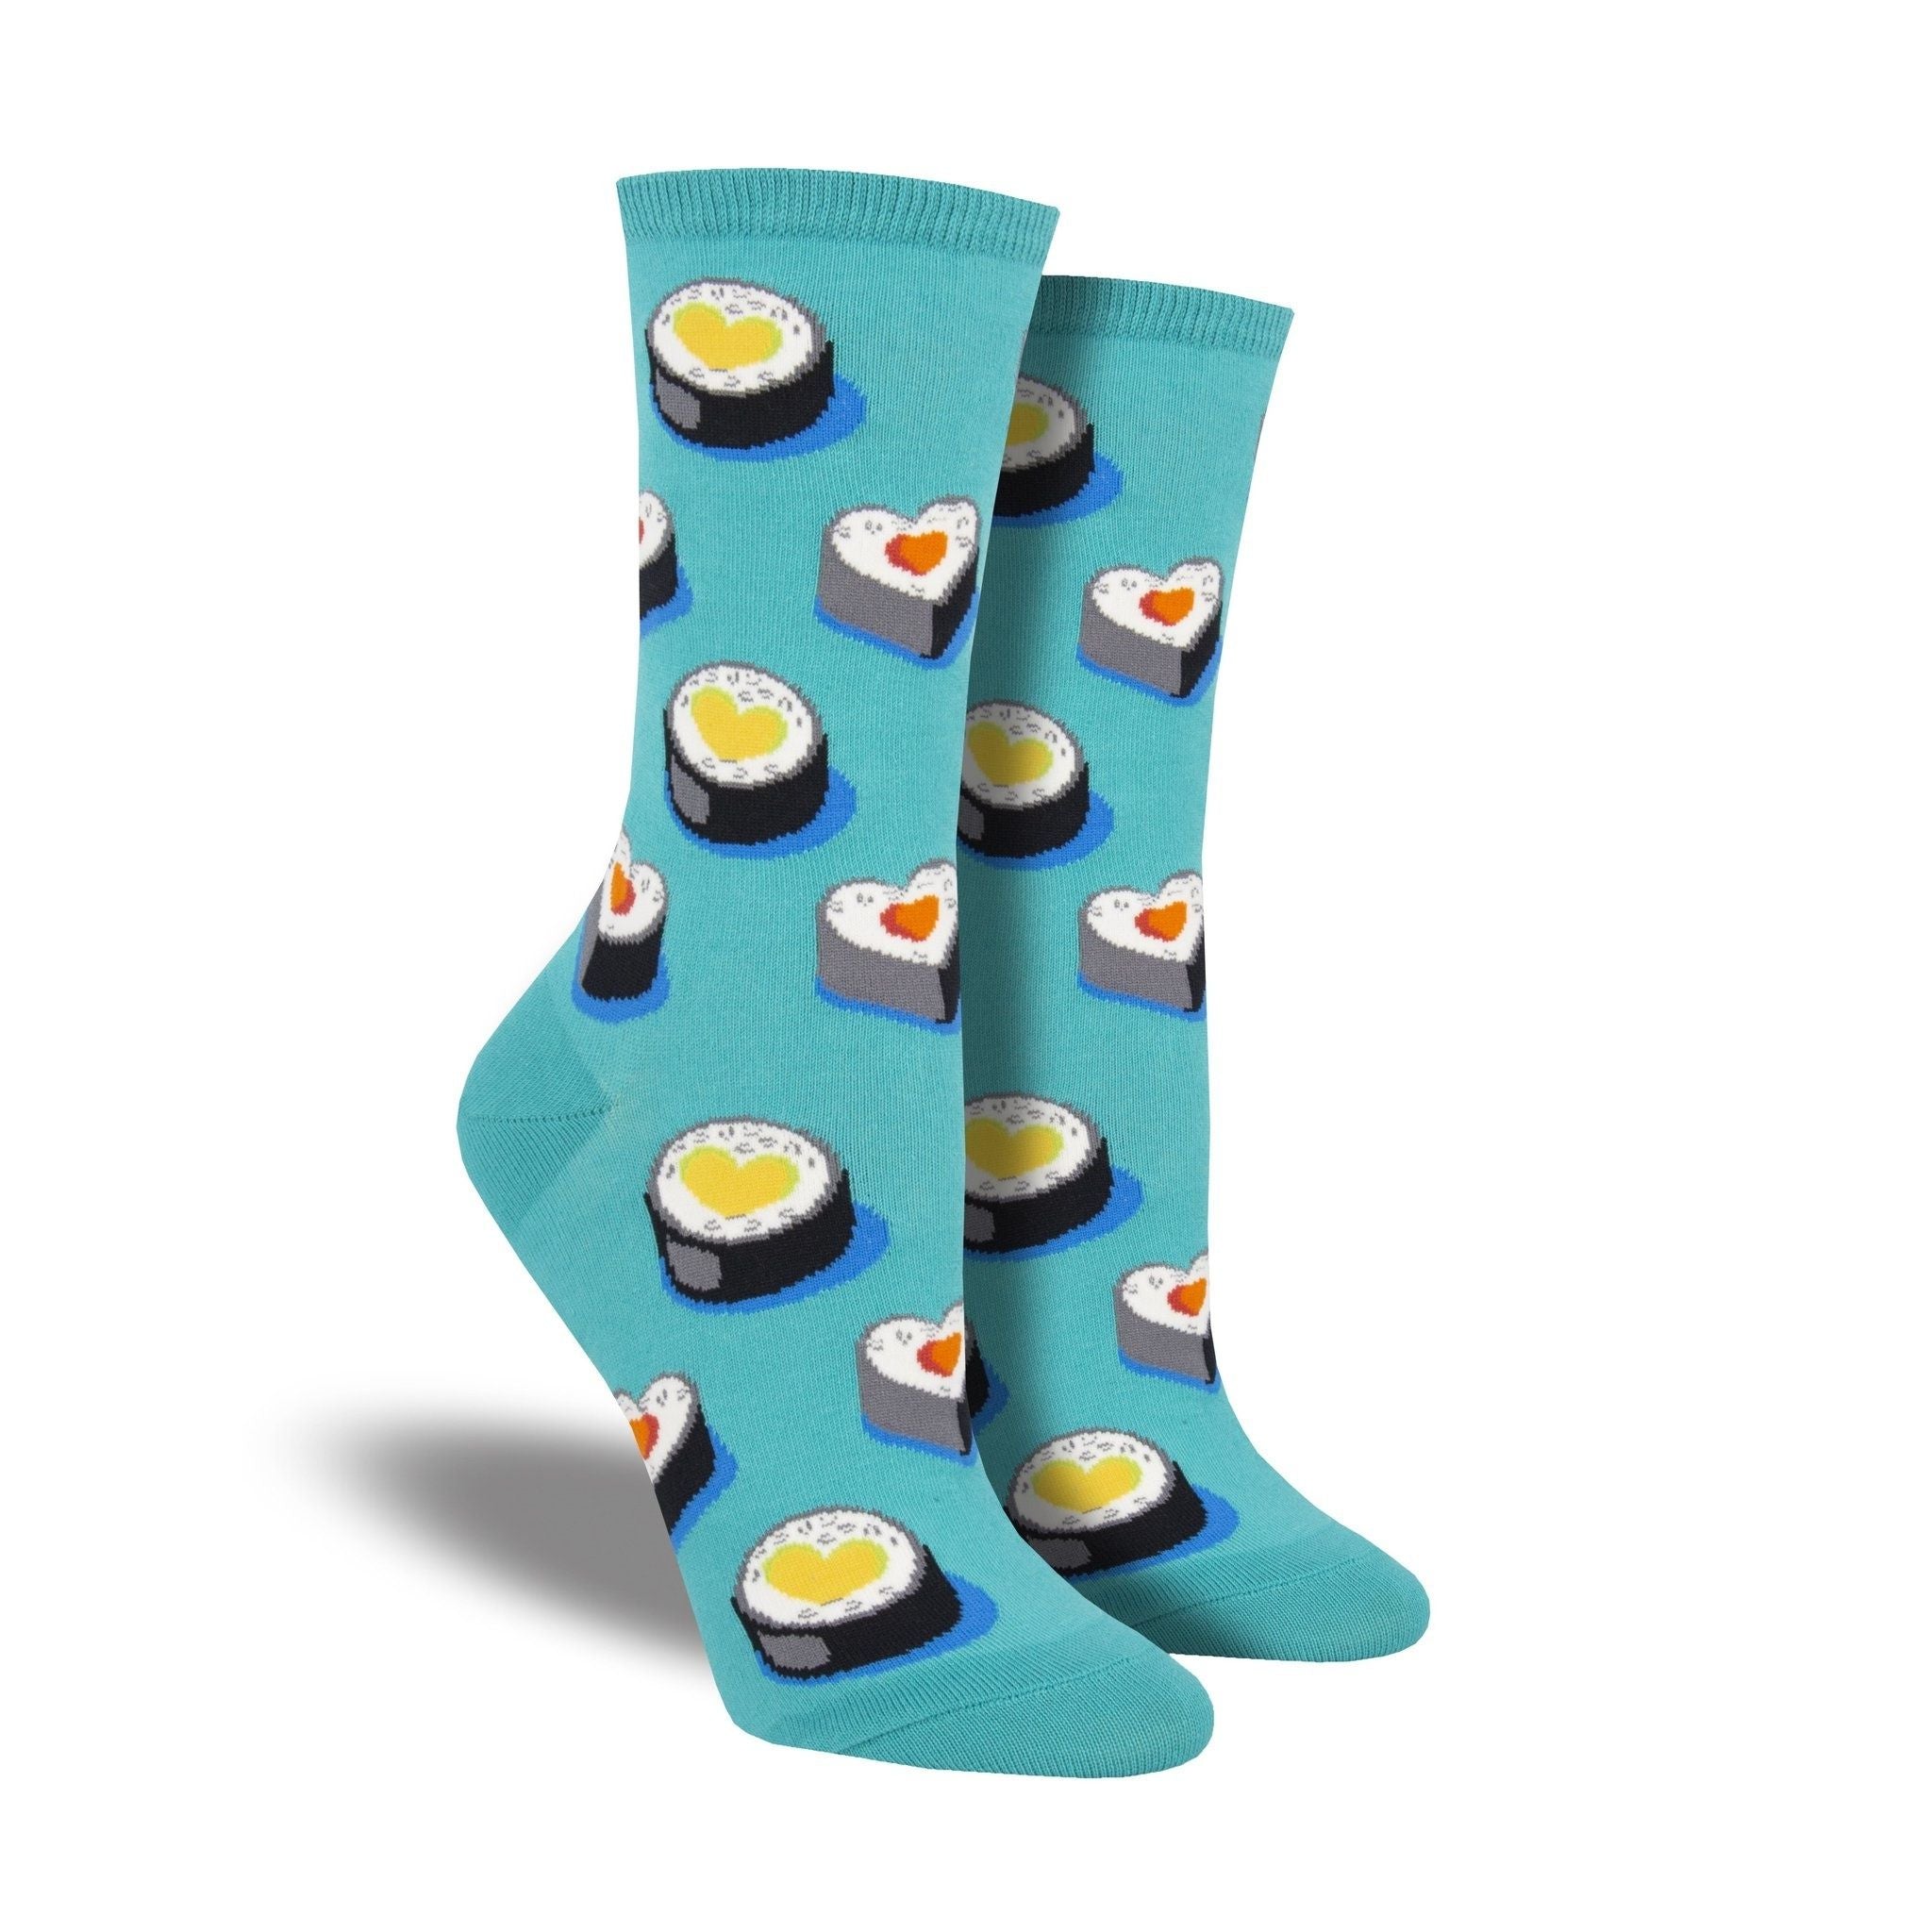 Blue socks with cute heart sushi rolls on them